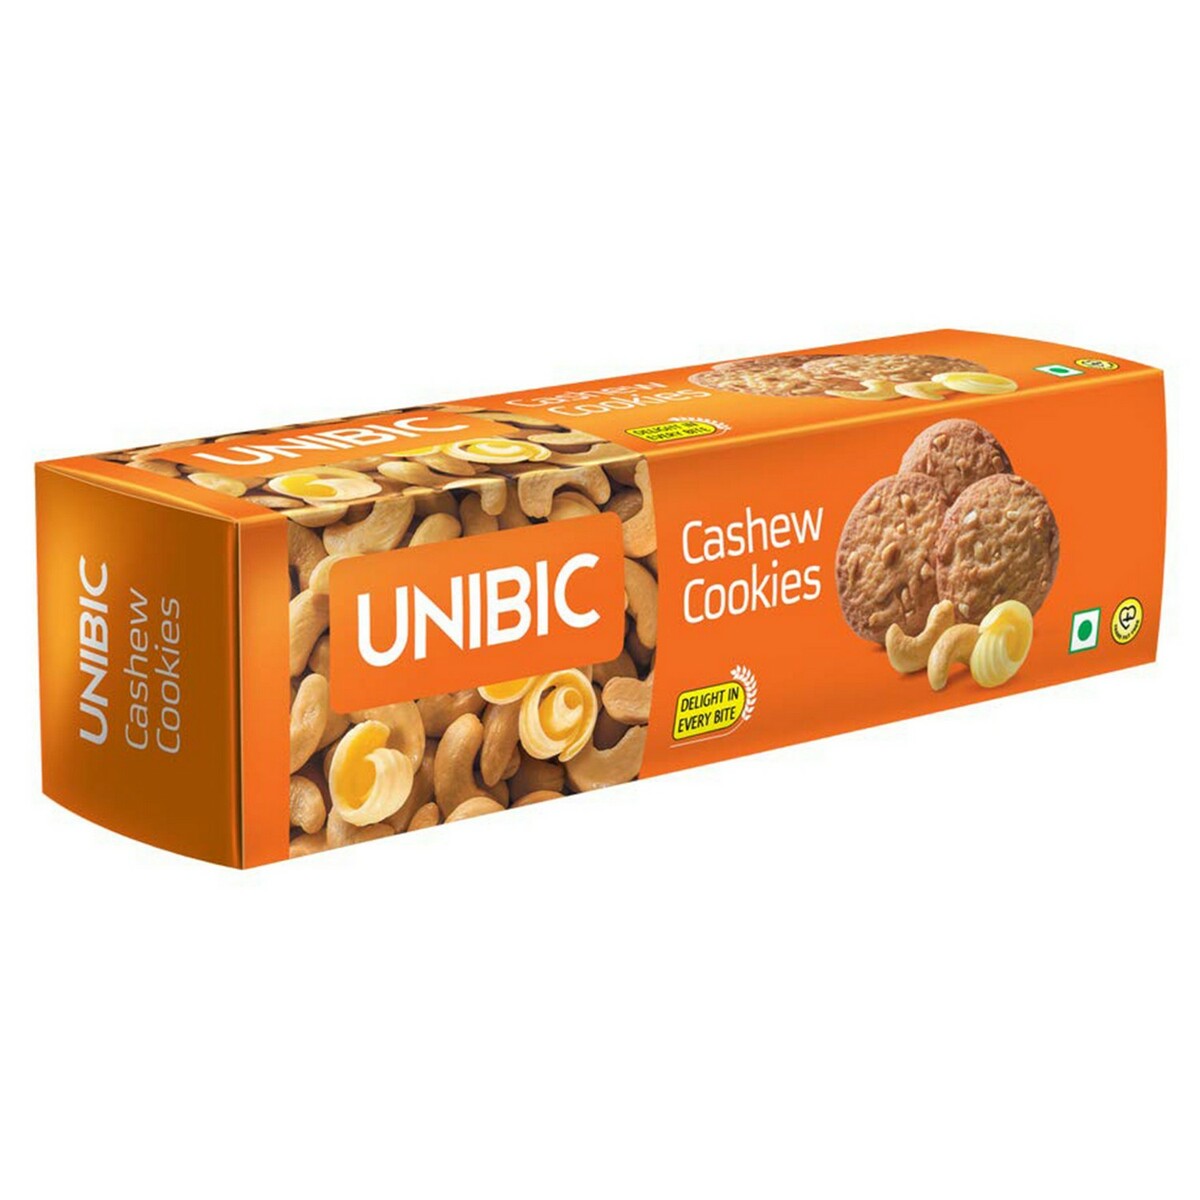 Unibic Cashew Cookies 150g